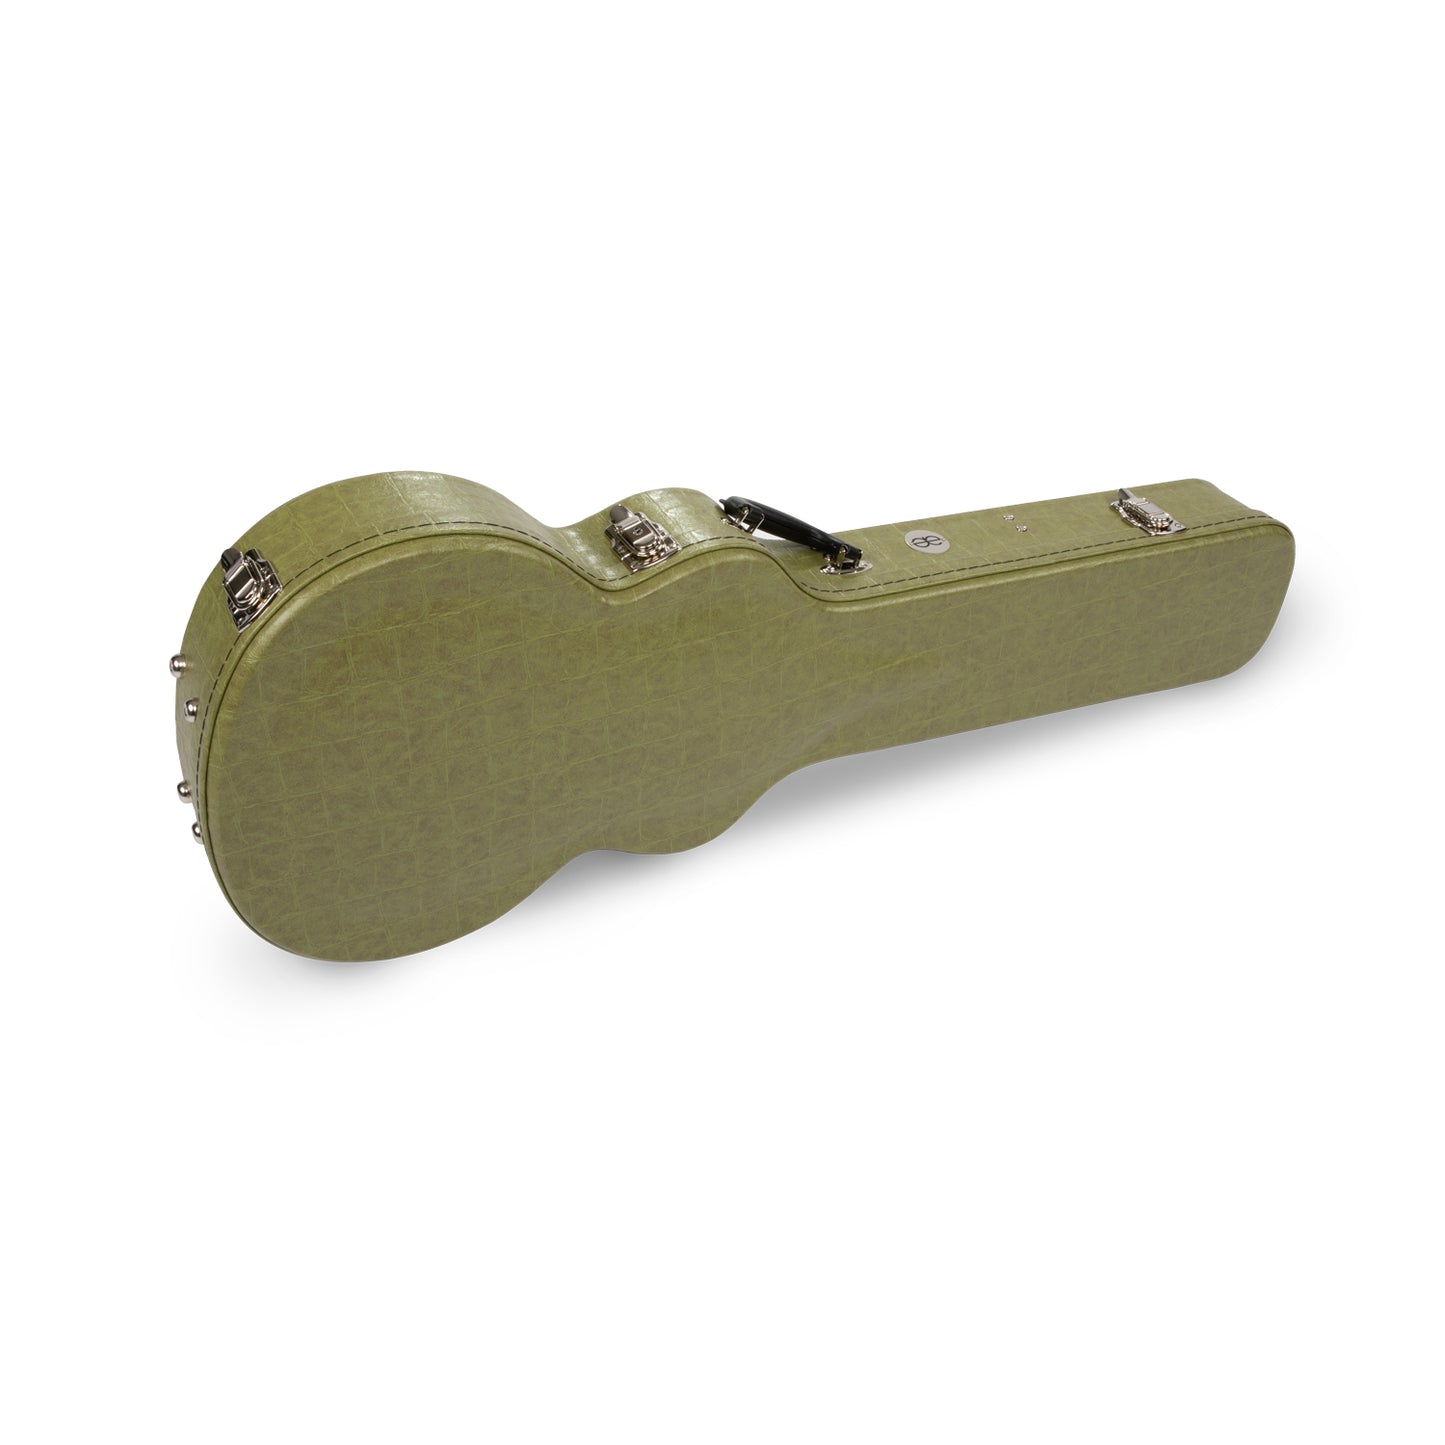 Allen Eden Army Green Arch Top Les Paul Alligator Skin Hardshell Guitar Case